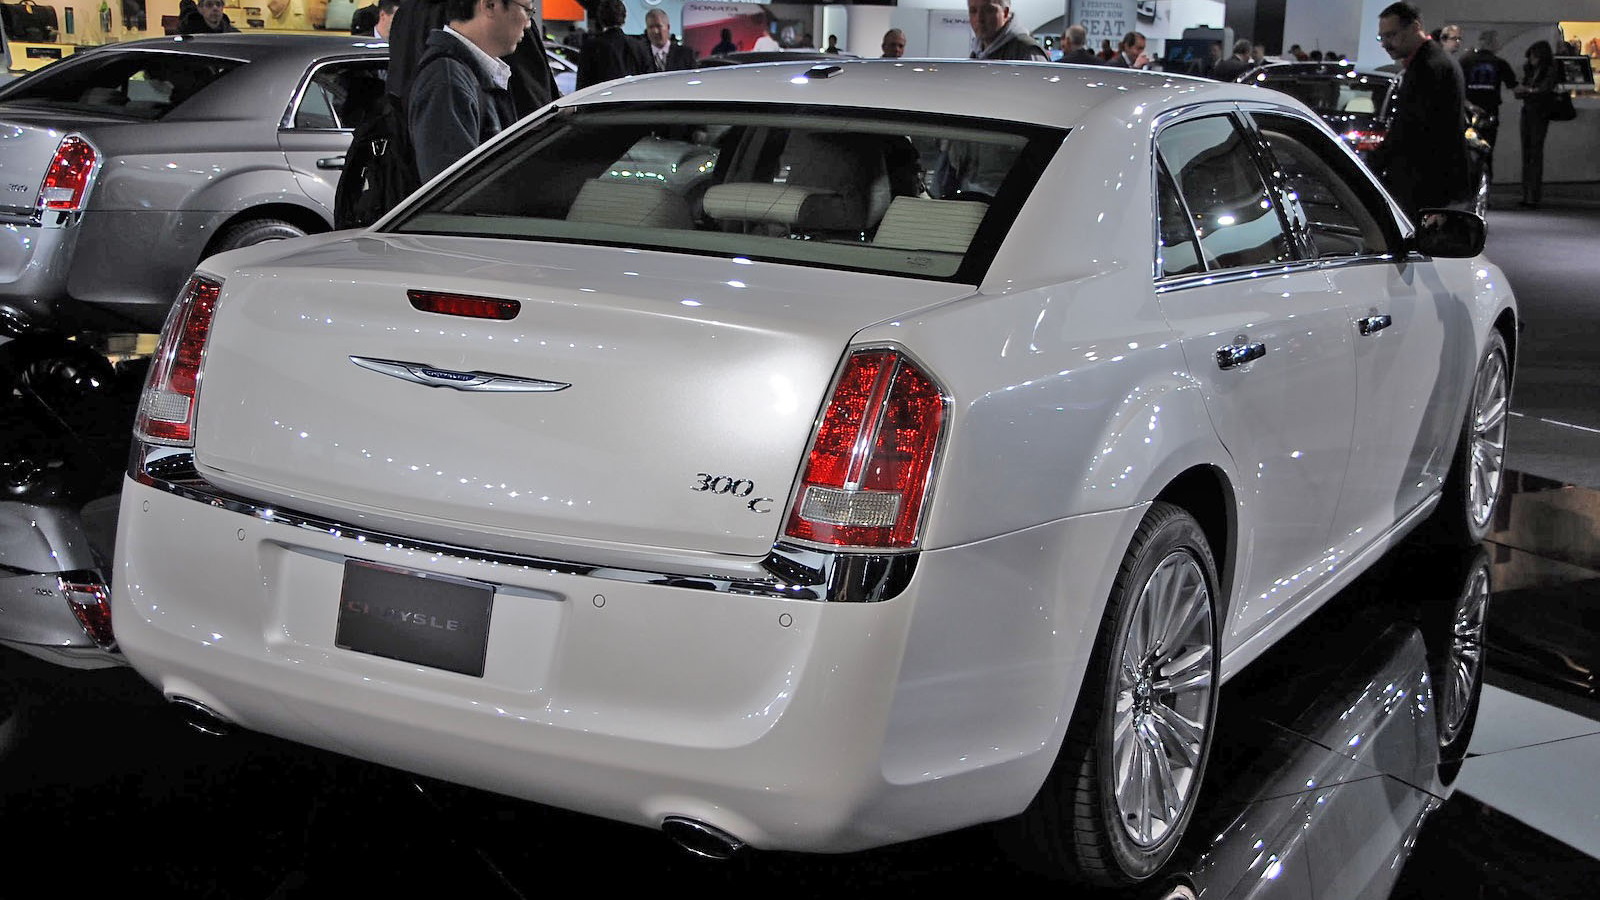 2011 Chrysler 300. Photo by Joe Nuxoll.